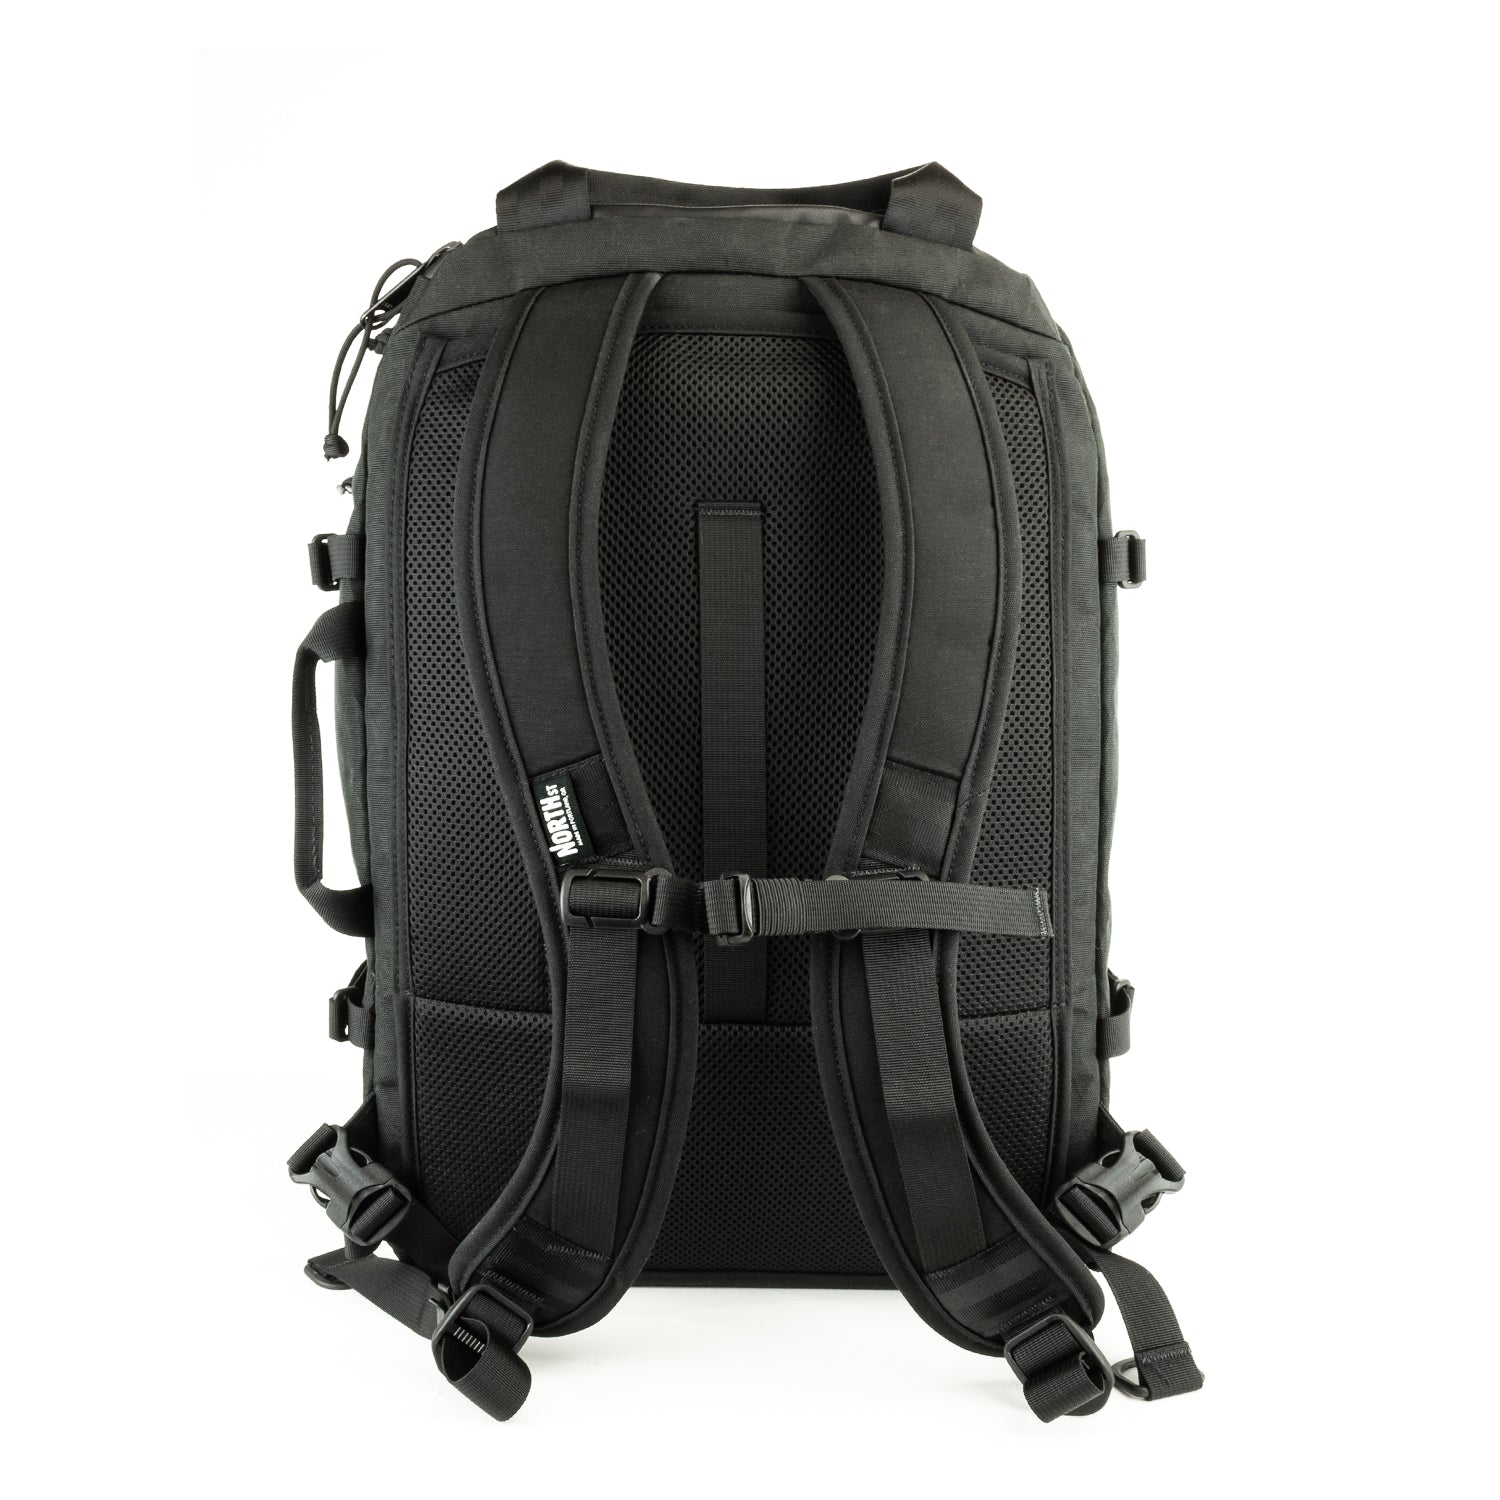 Shop Bags - Gym Bags, Backpacks, Laptop Bags